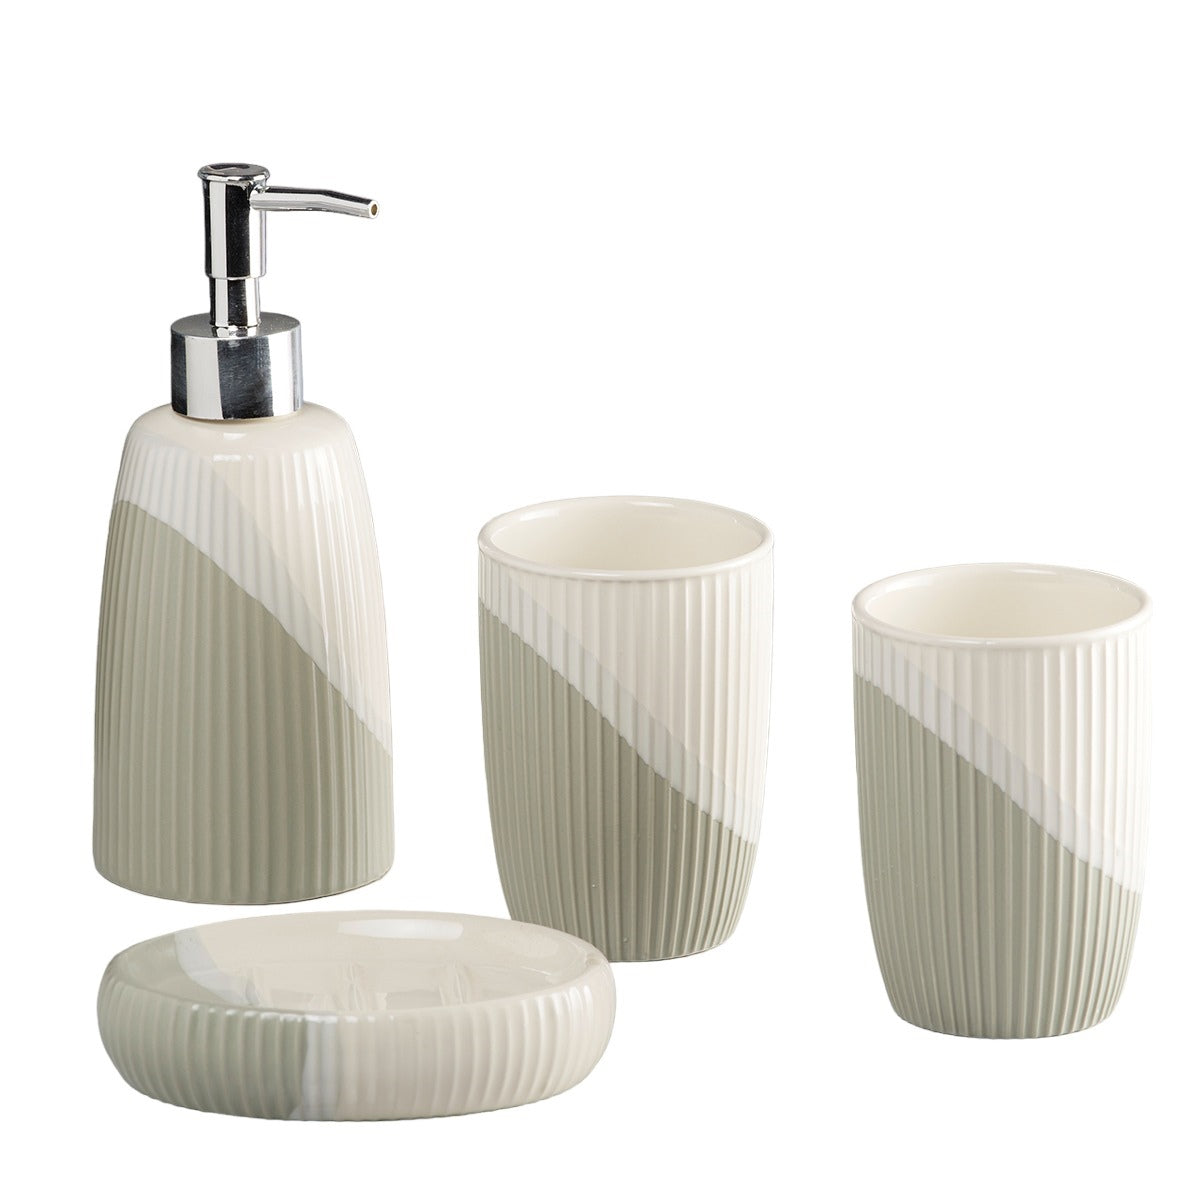 Ceramic Bathroom Set of 4 with Soap Dispenser (10101)